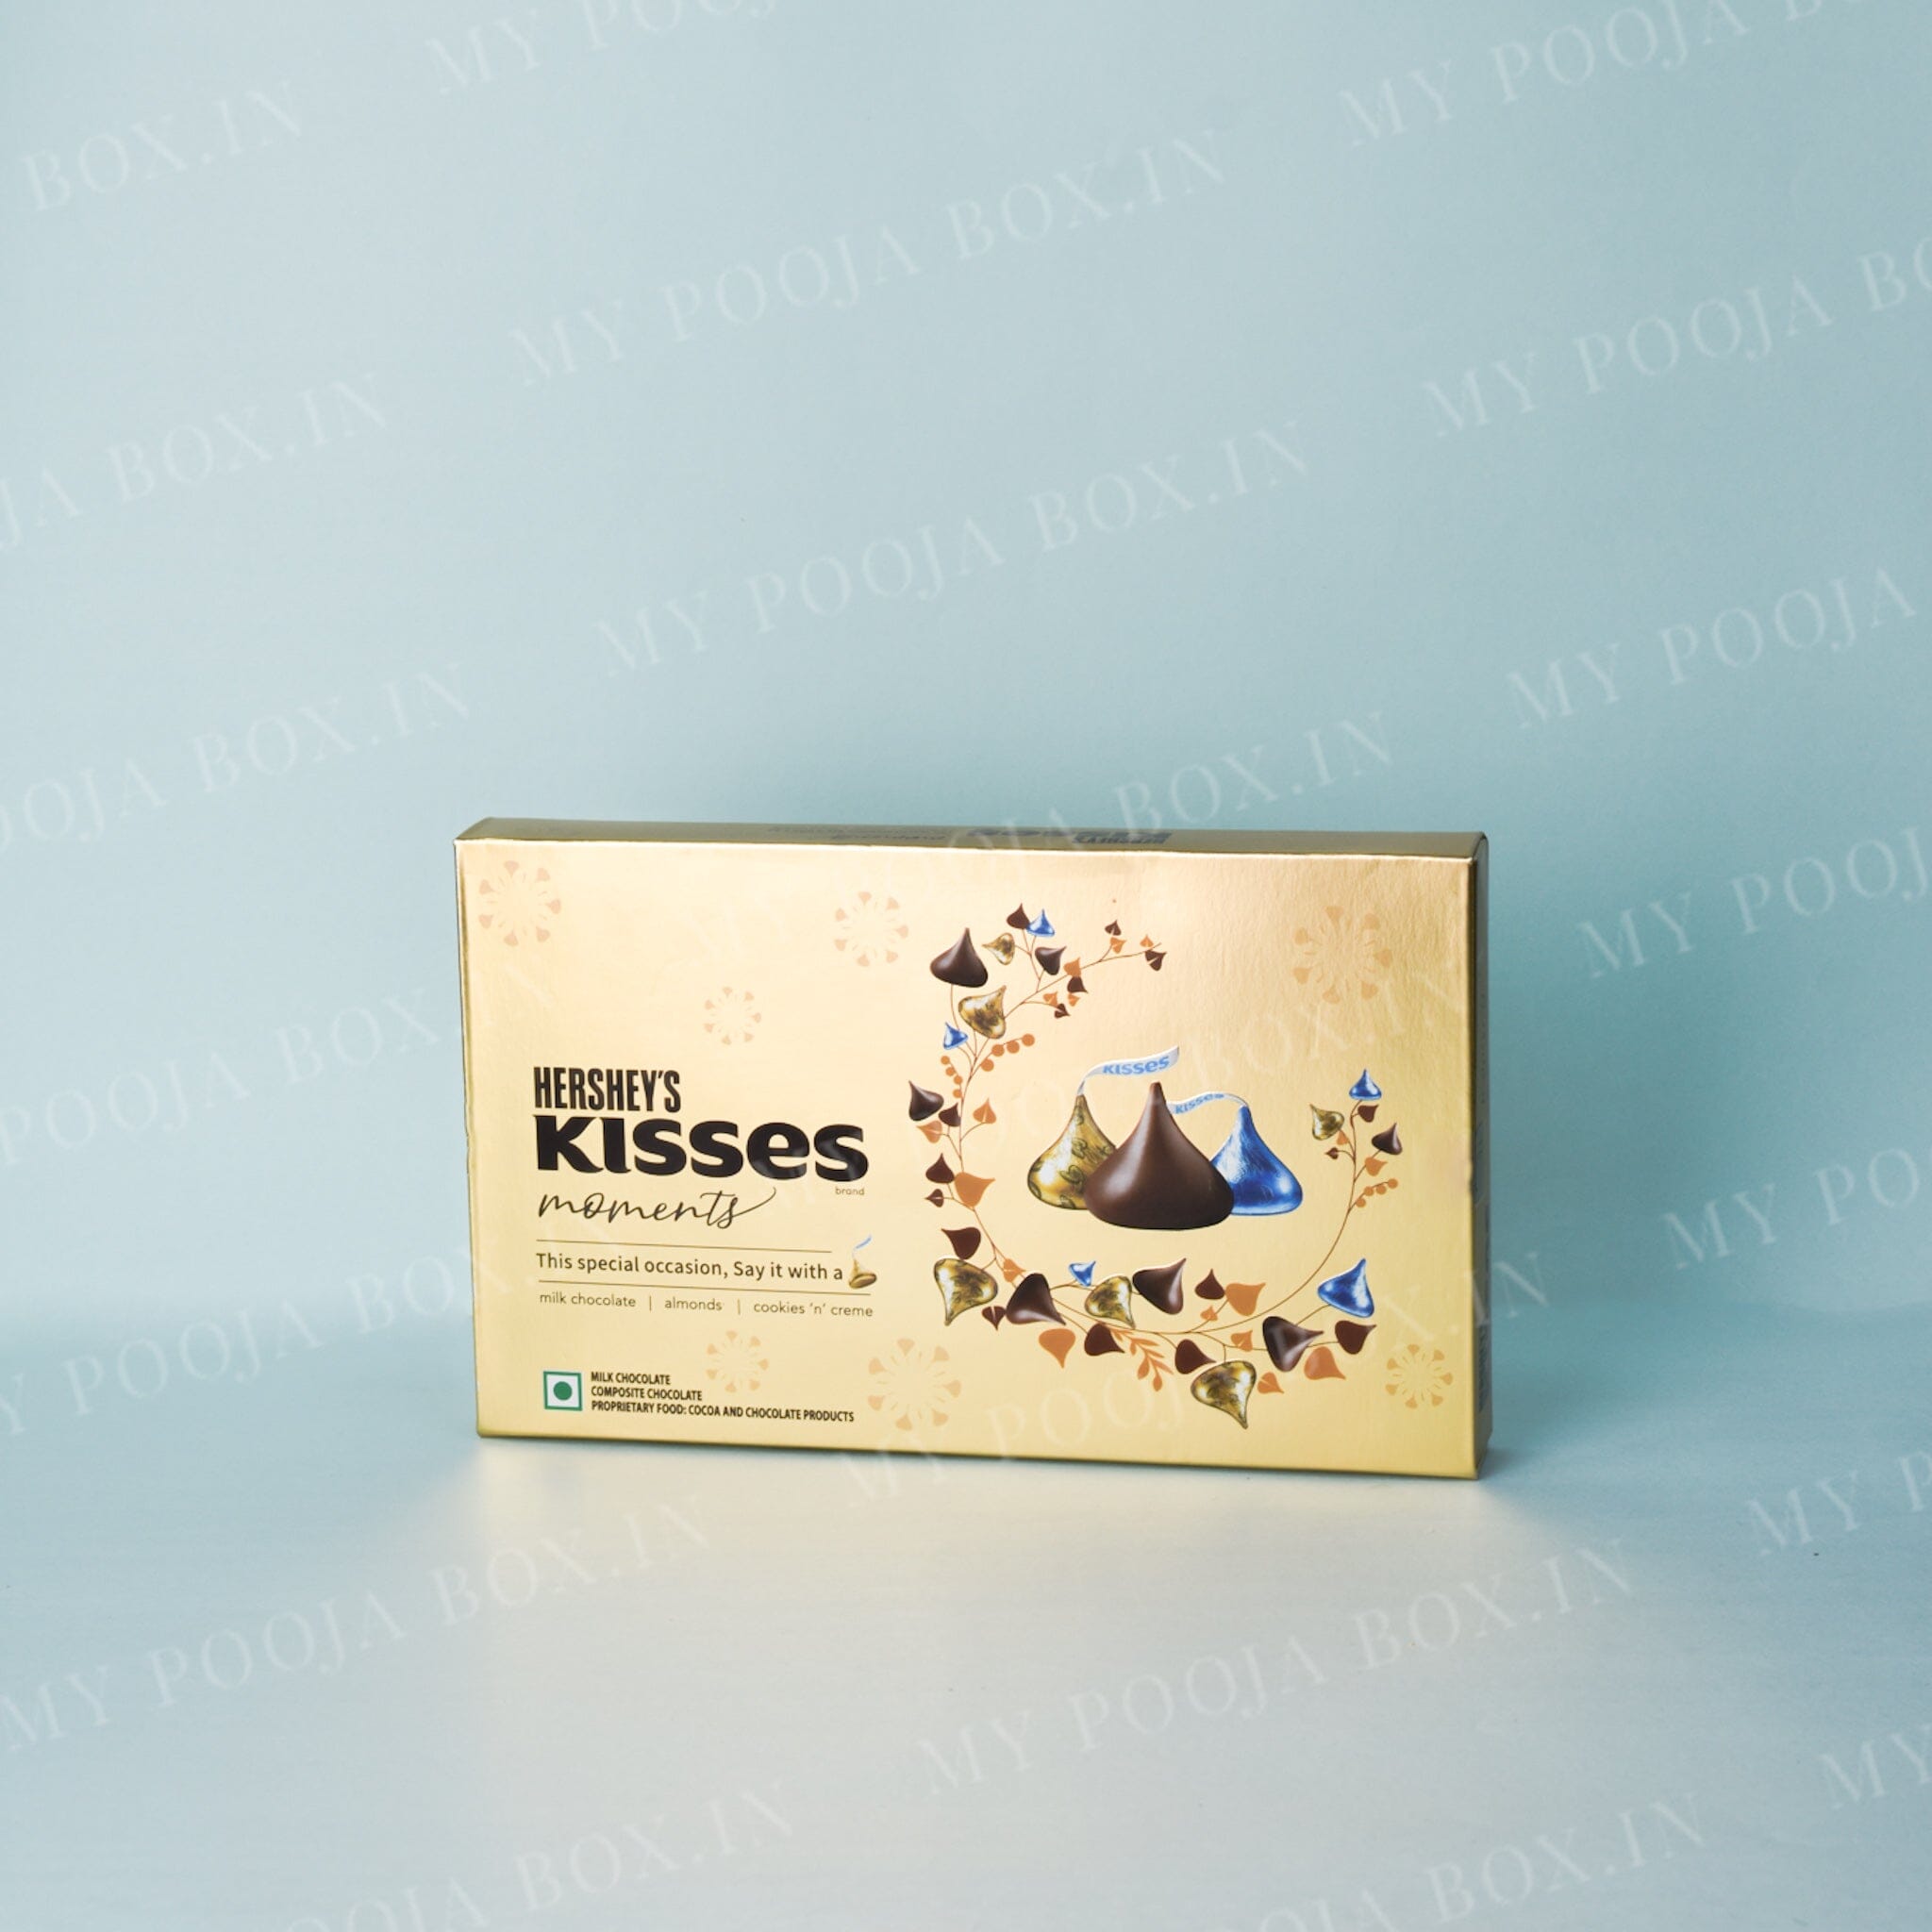 Hershey's Kisses Everyday Moment Chocolate Box